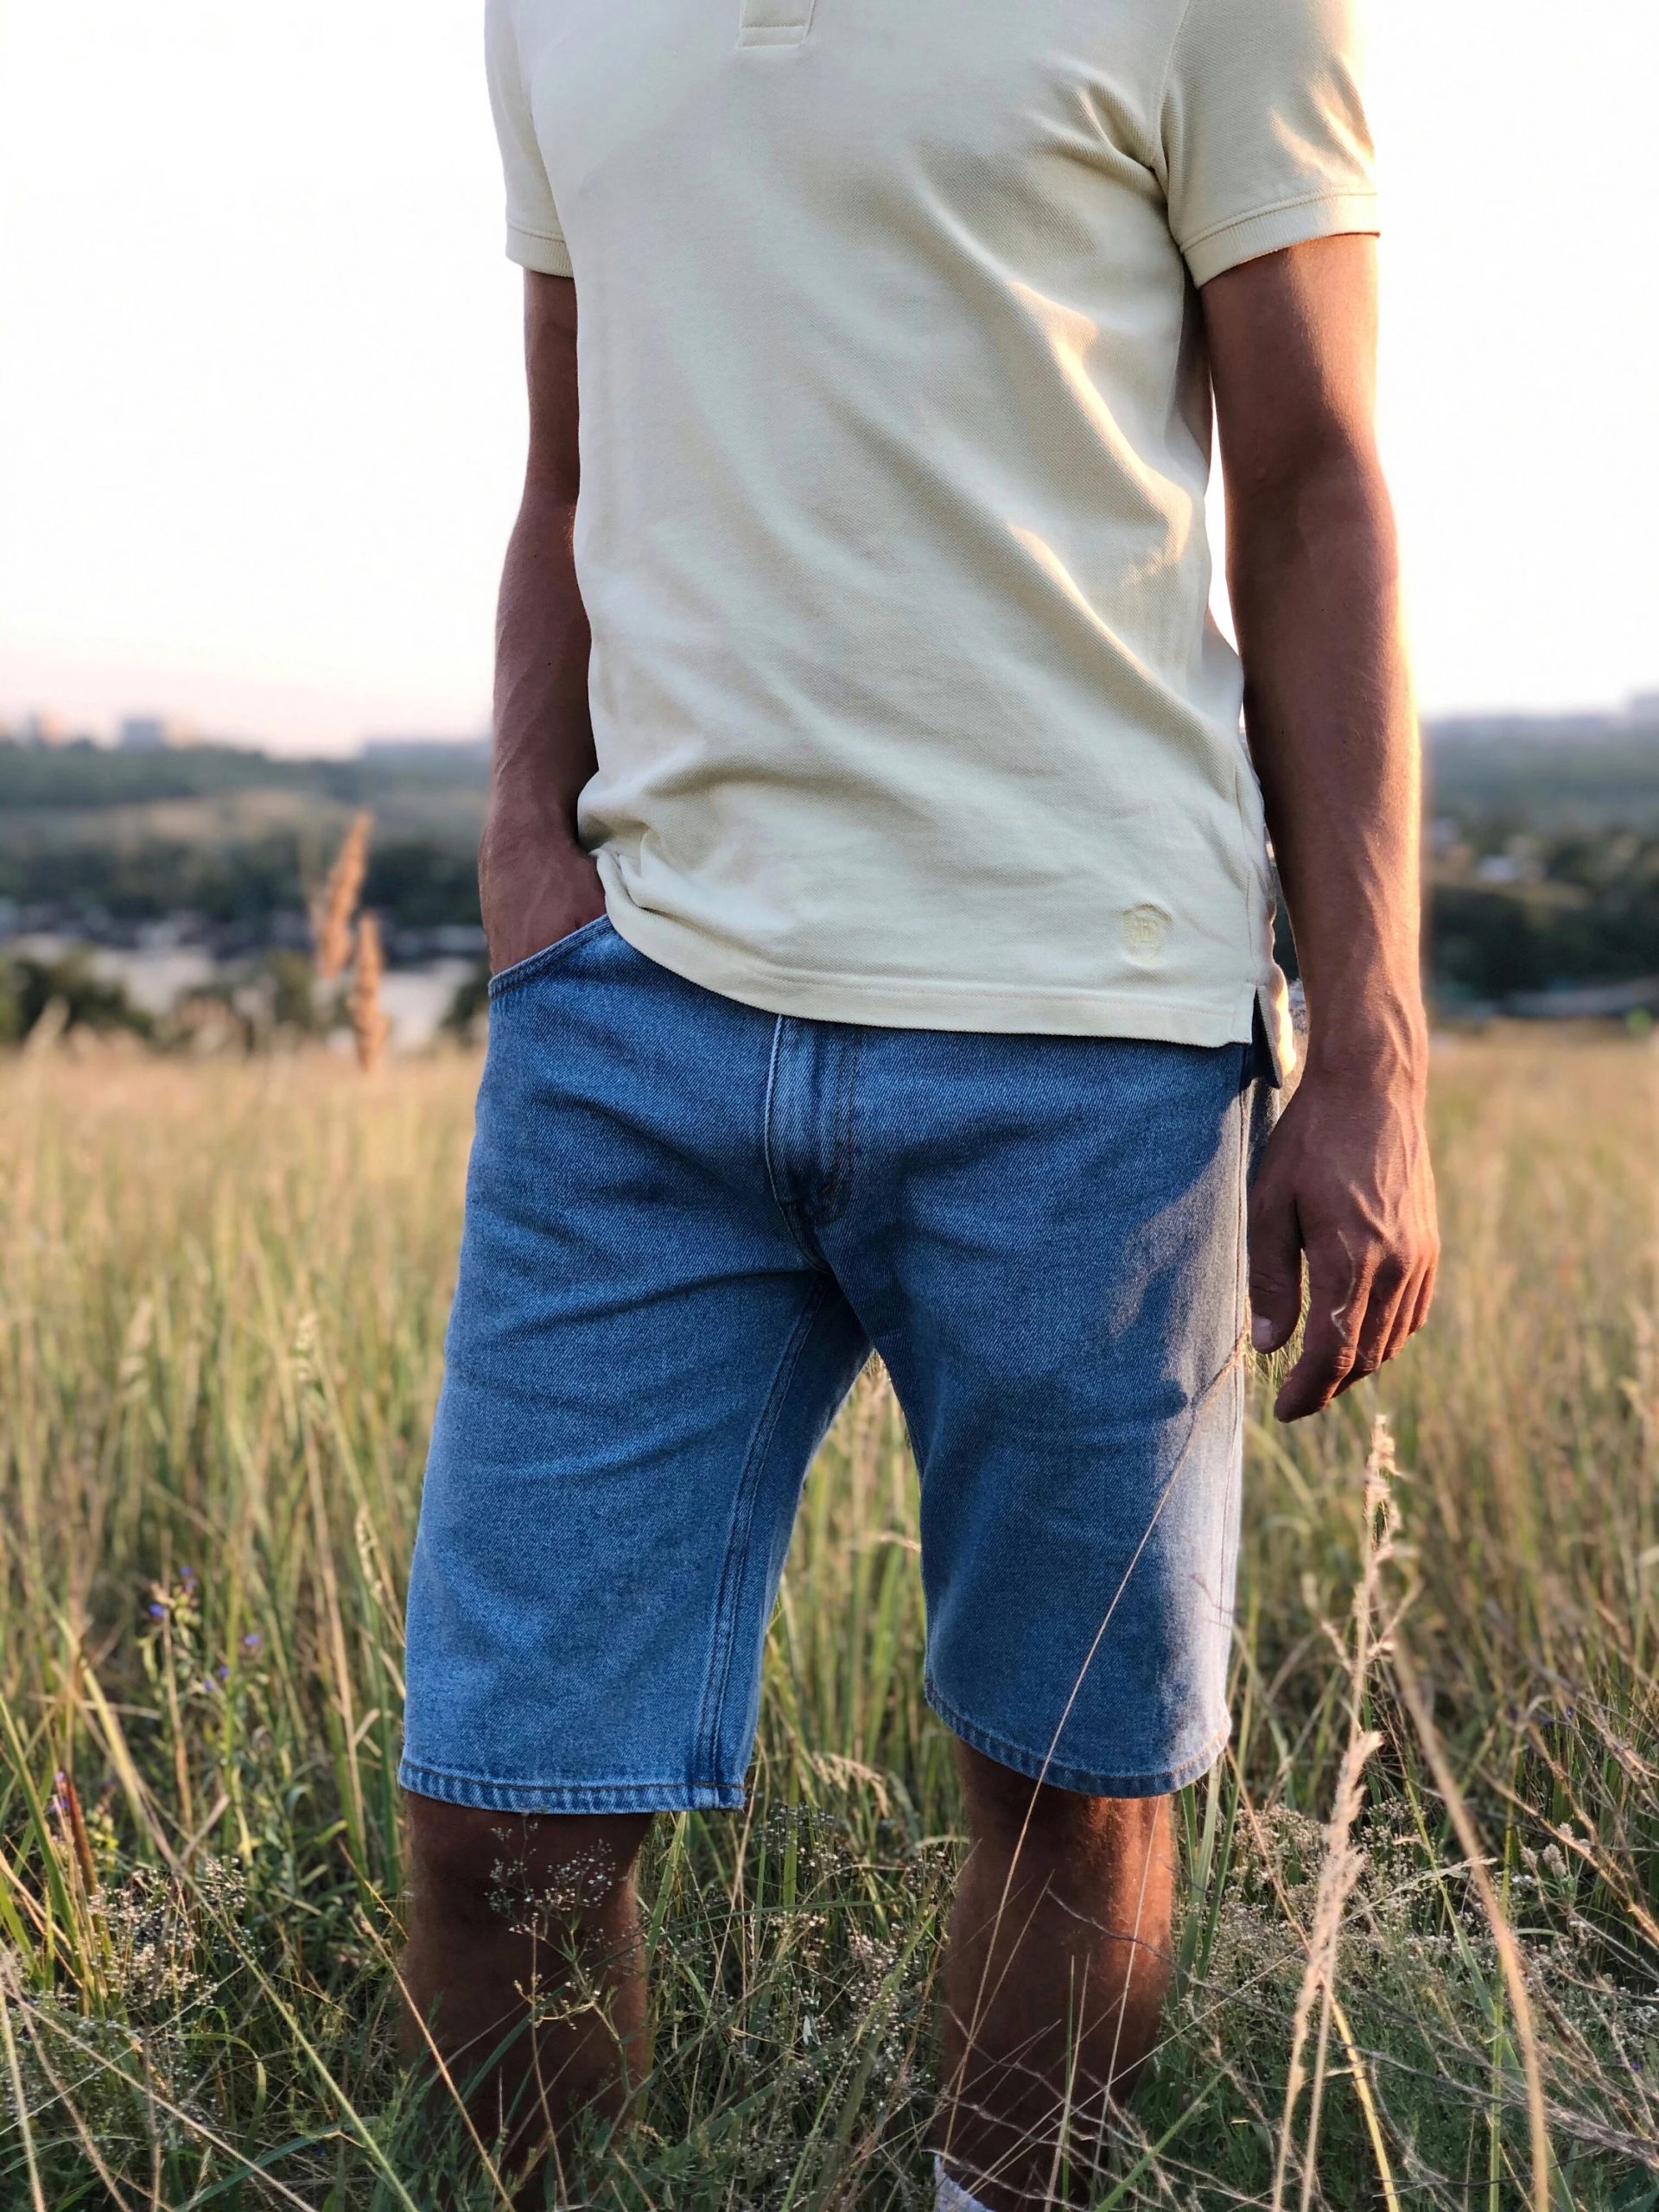 mens jeans shorts